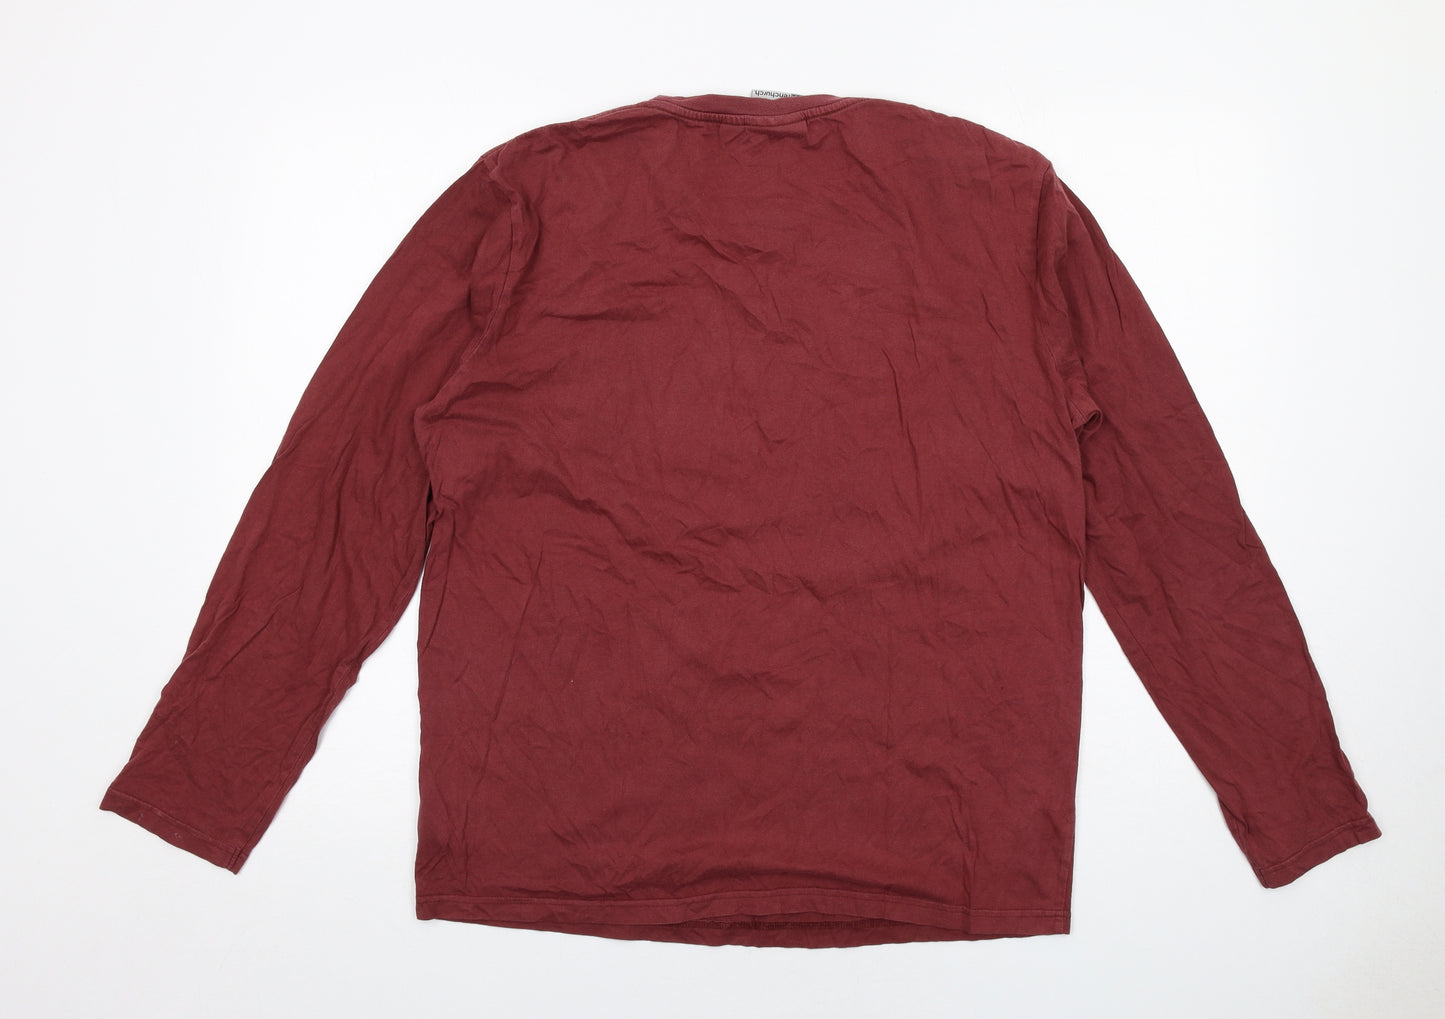 Fenchurch Mens Red Cotton T-Shirt Size XL Round Neck